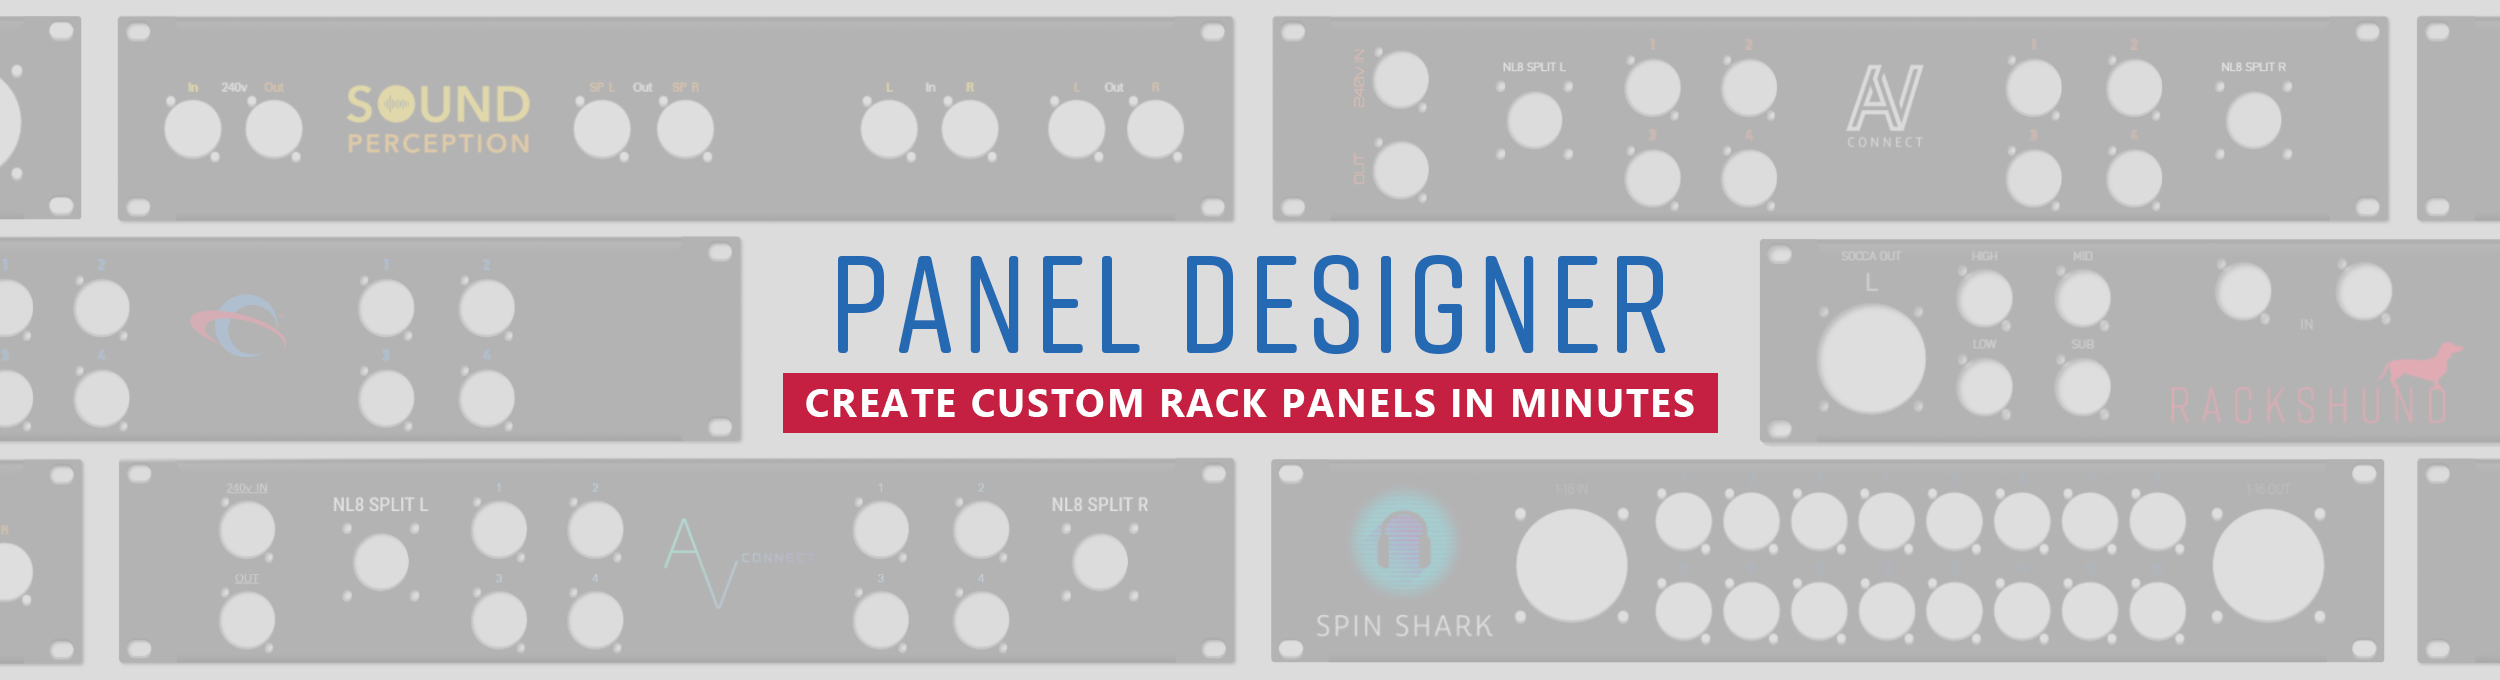 Panel Designer - Create Custom Rack Panels in Minutes